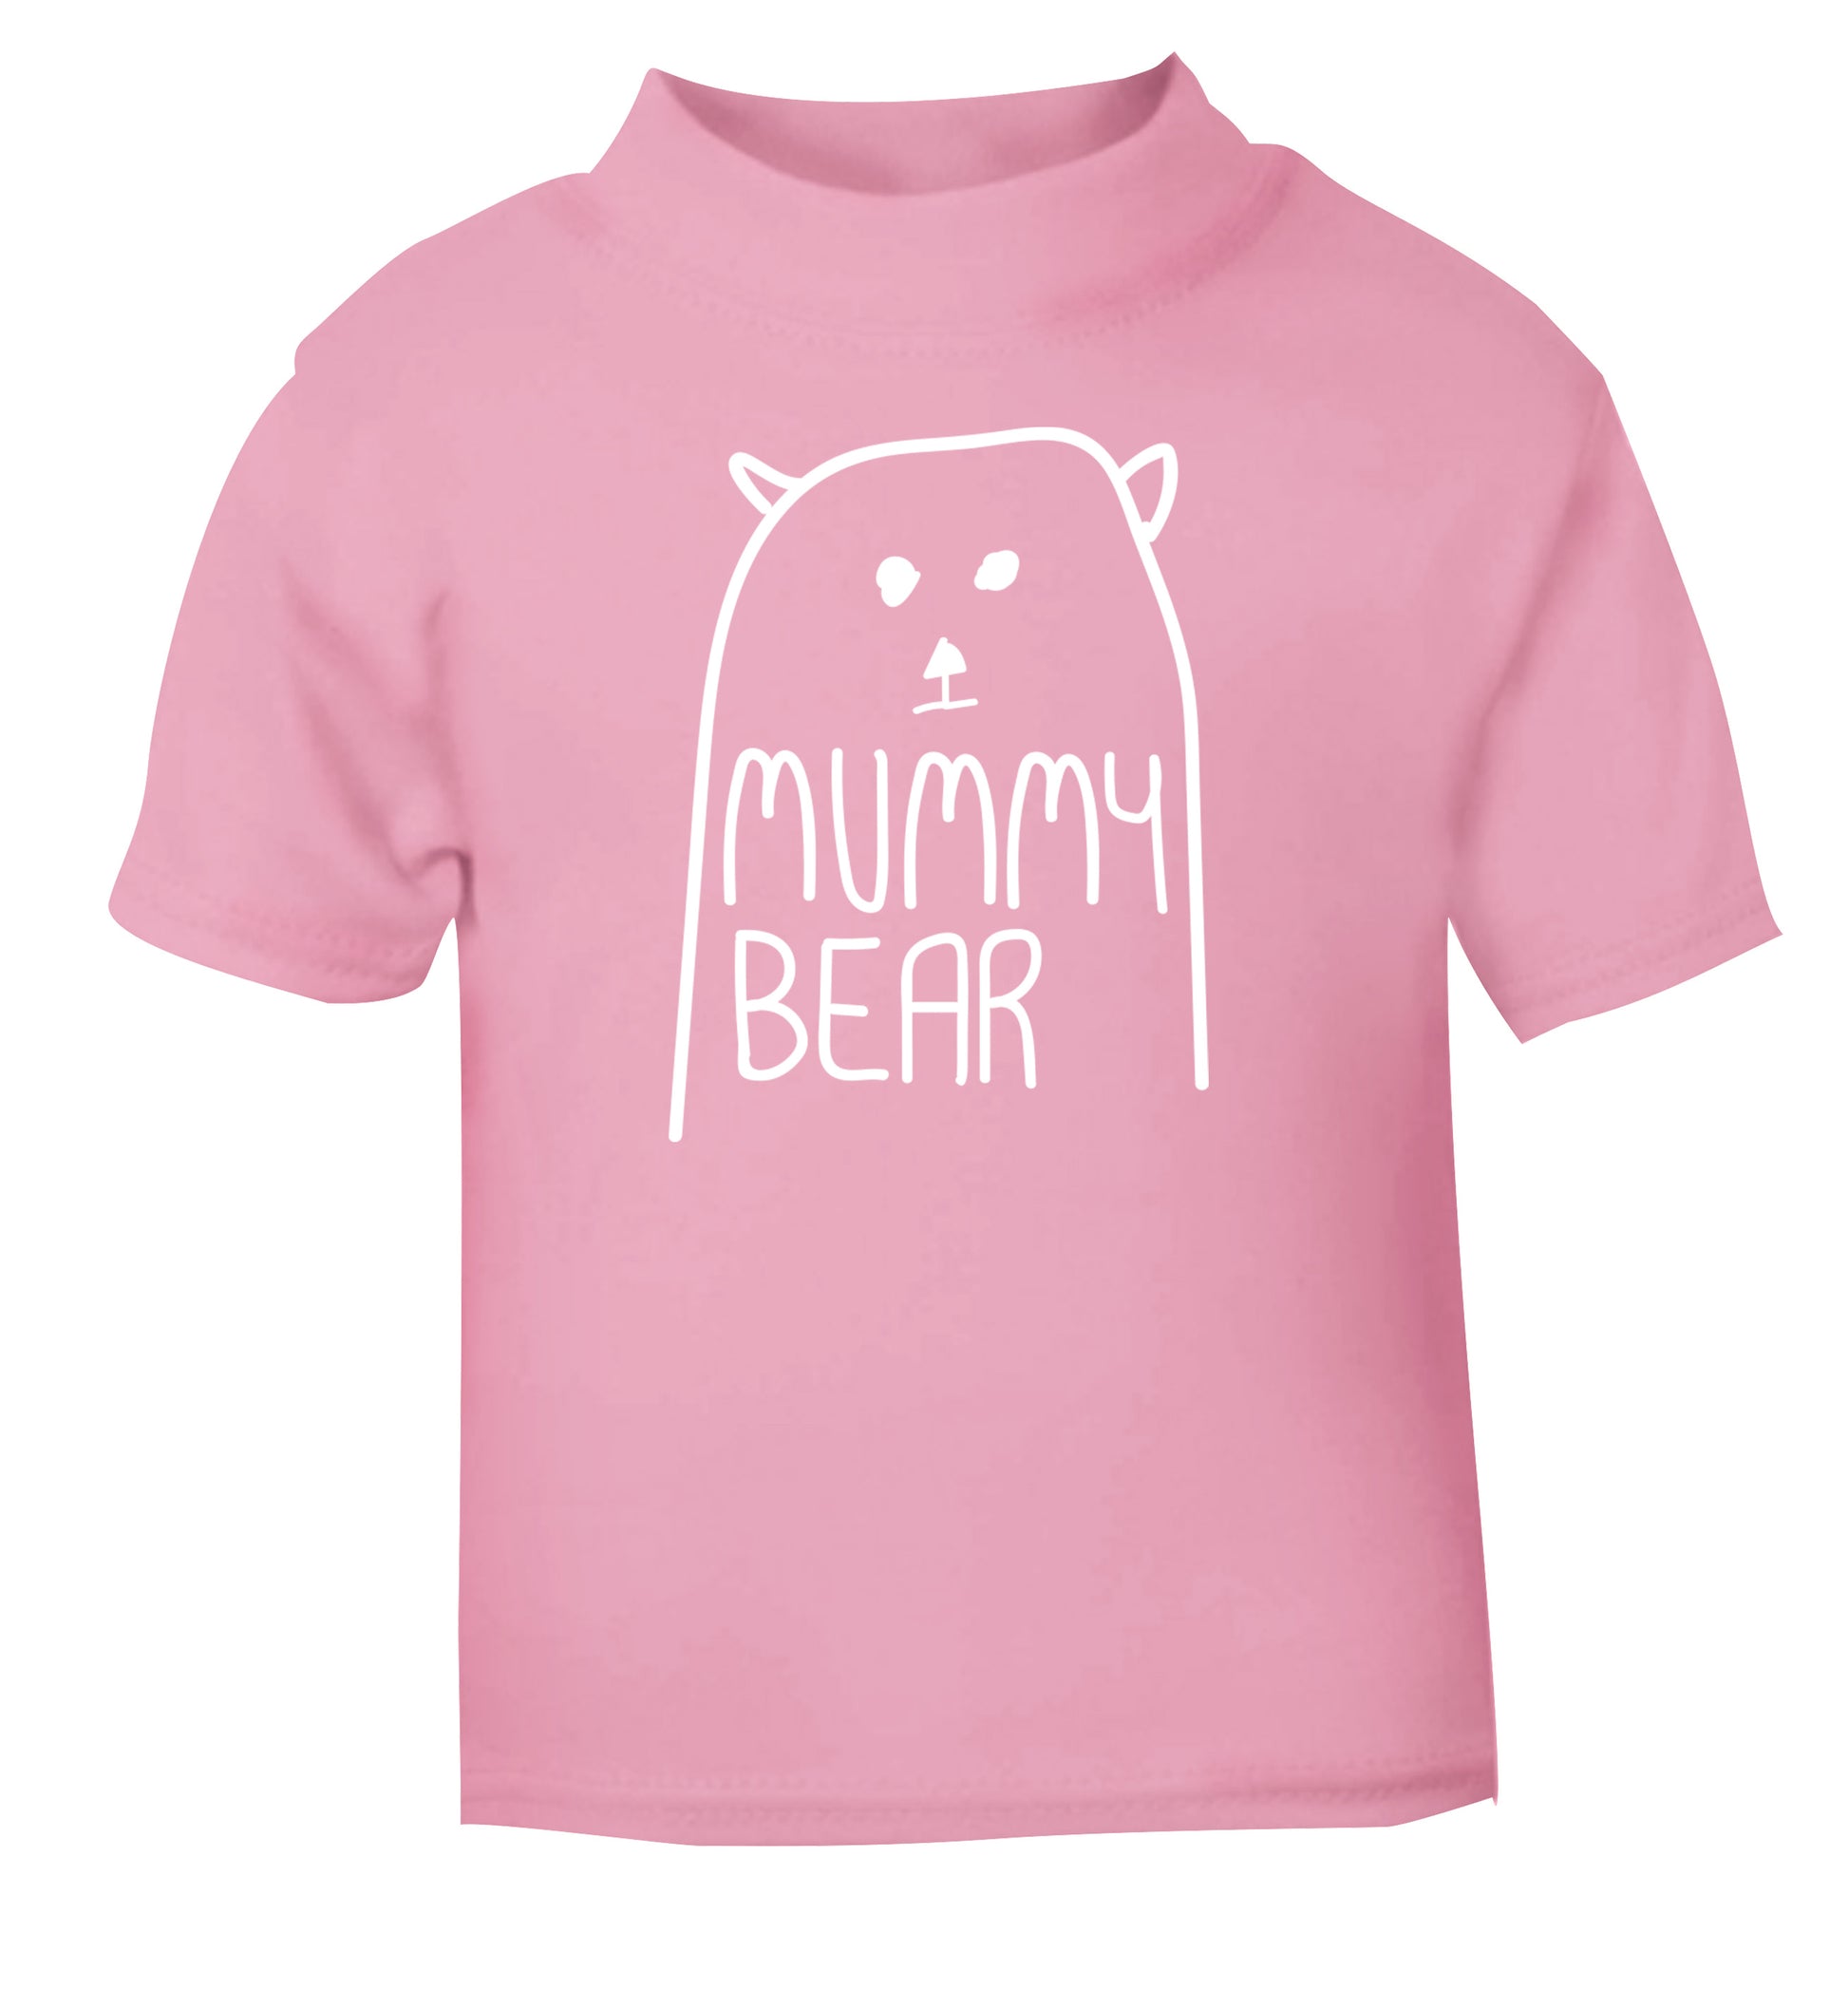 Mummy bear light pink baby toddler Tshirt 2 Years